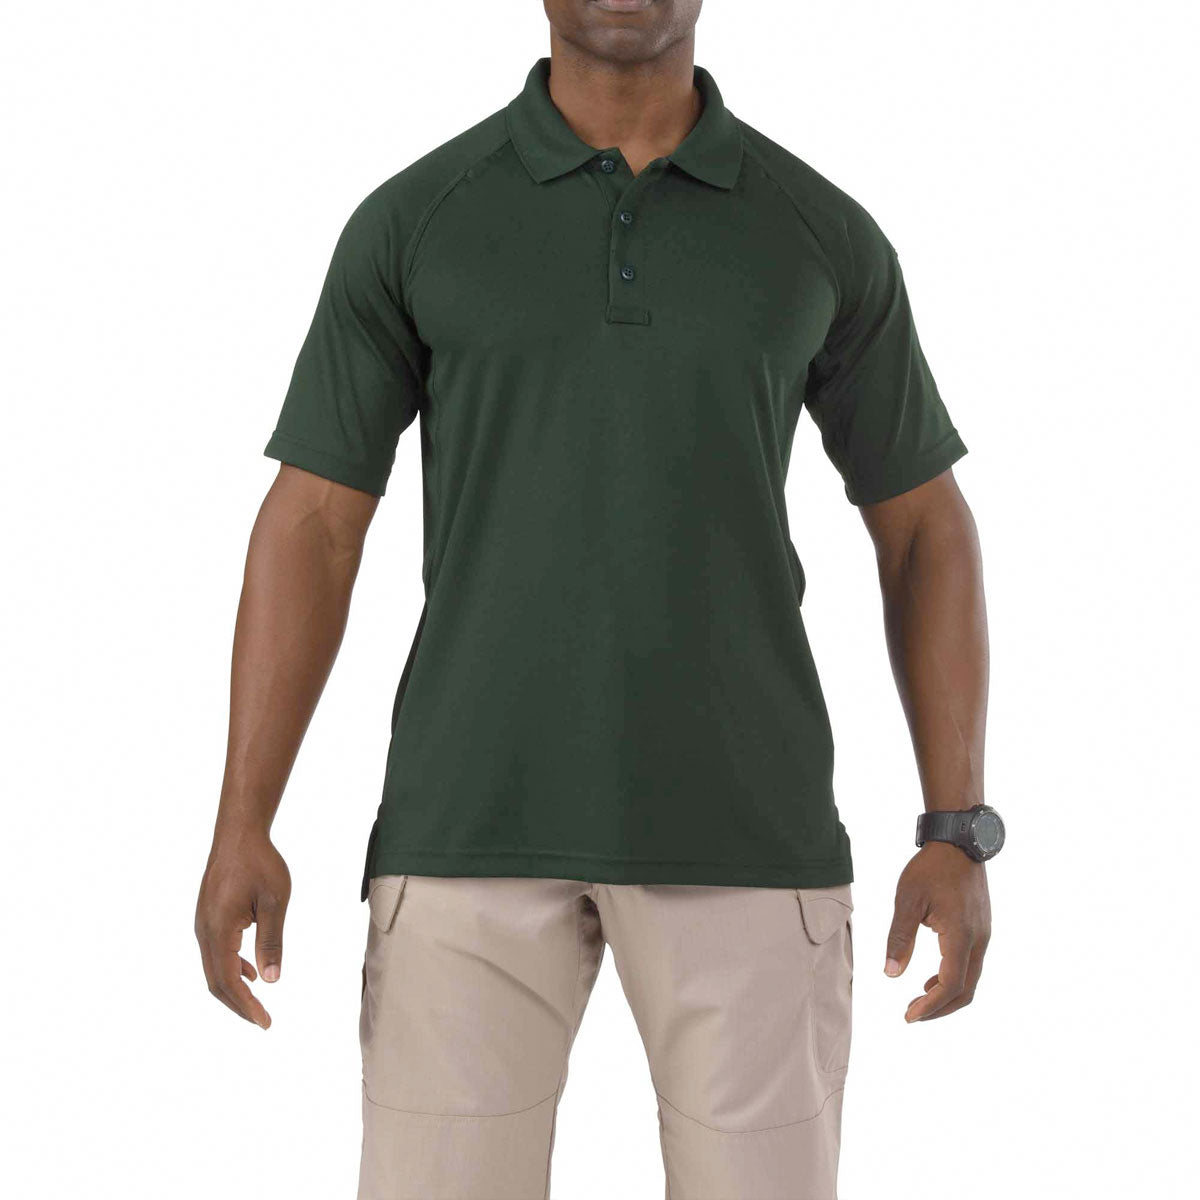 5.11 Tactical Performance Short Sleeve Polo Shirts L.E. Green (Copy) Shirts 5.11 Tactical Tactical Gear Supplier Tactical Distributors Australia